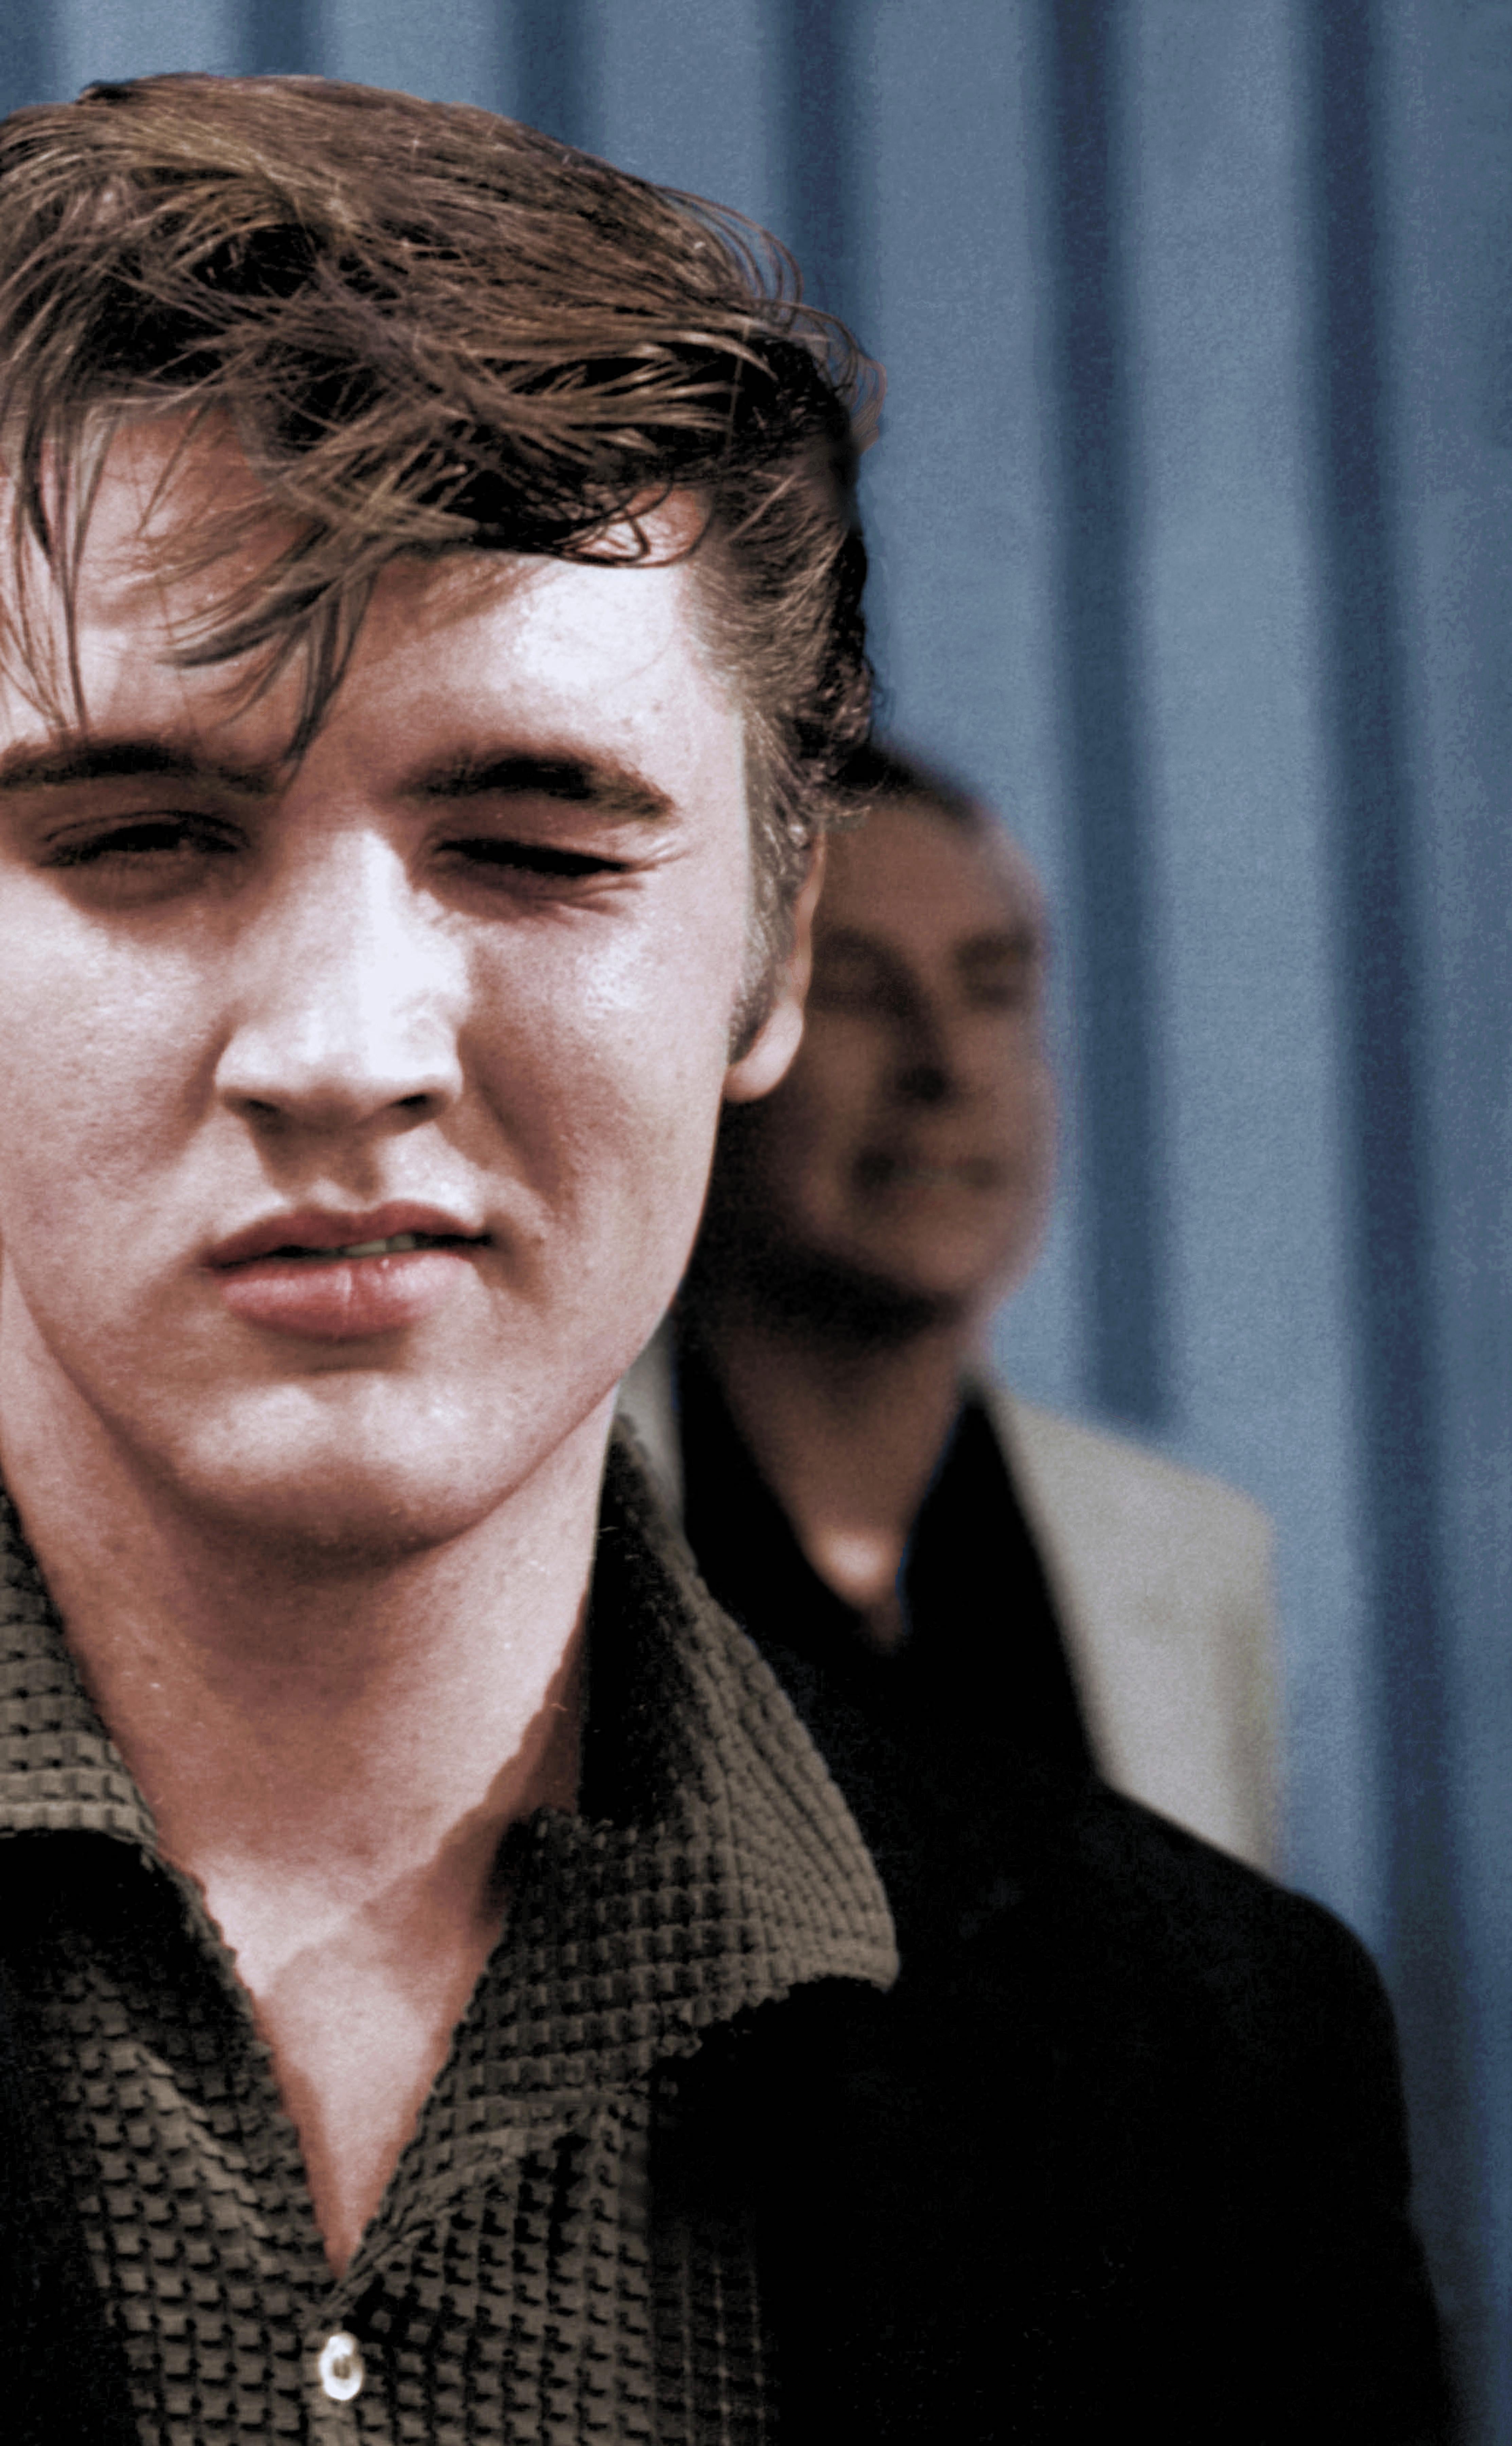 Lloyd Dinkins Portrait Photograph - Elvis Presley: The Wink